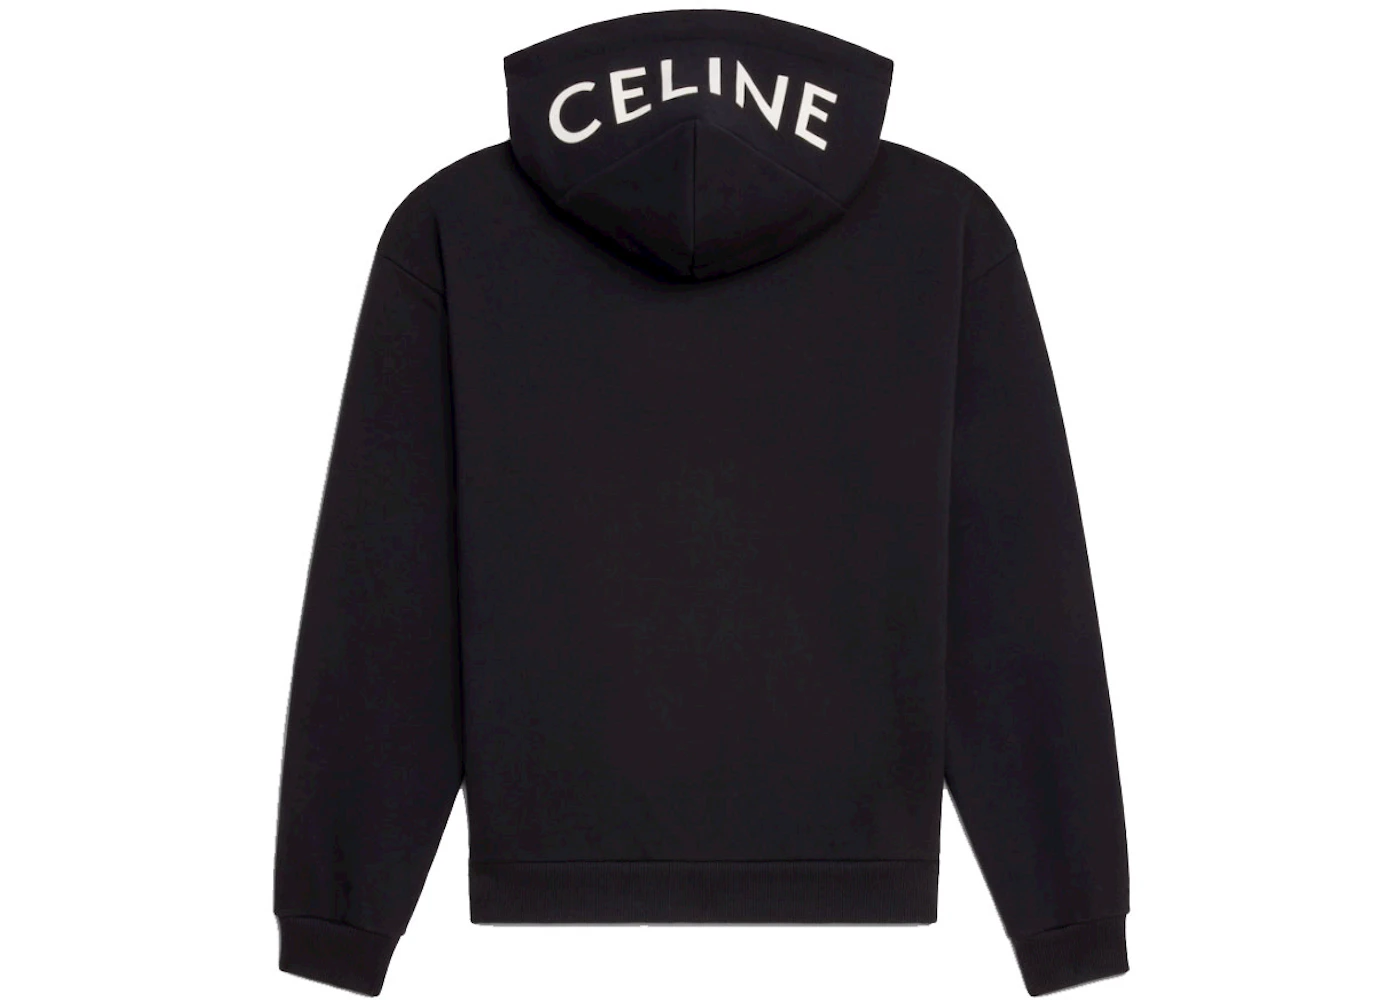 Celine Varsity-Style Jacket